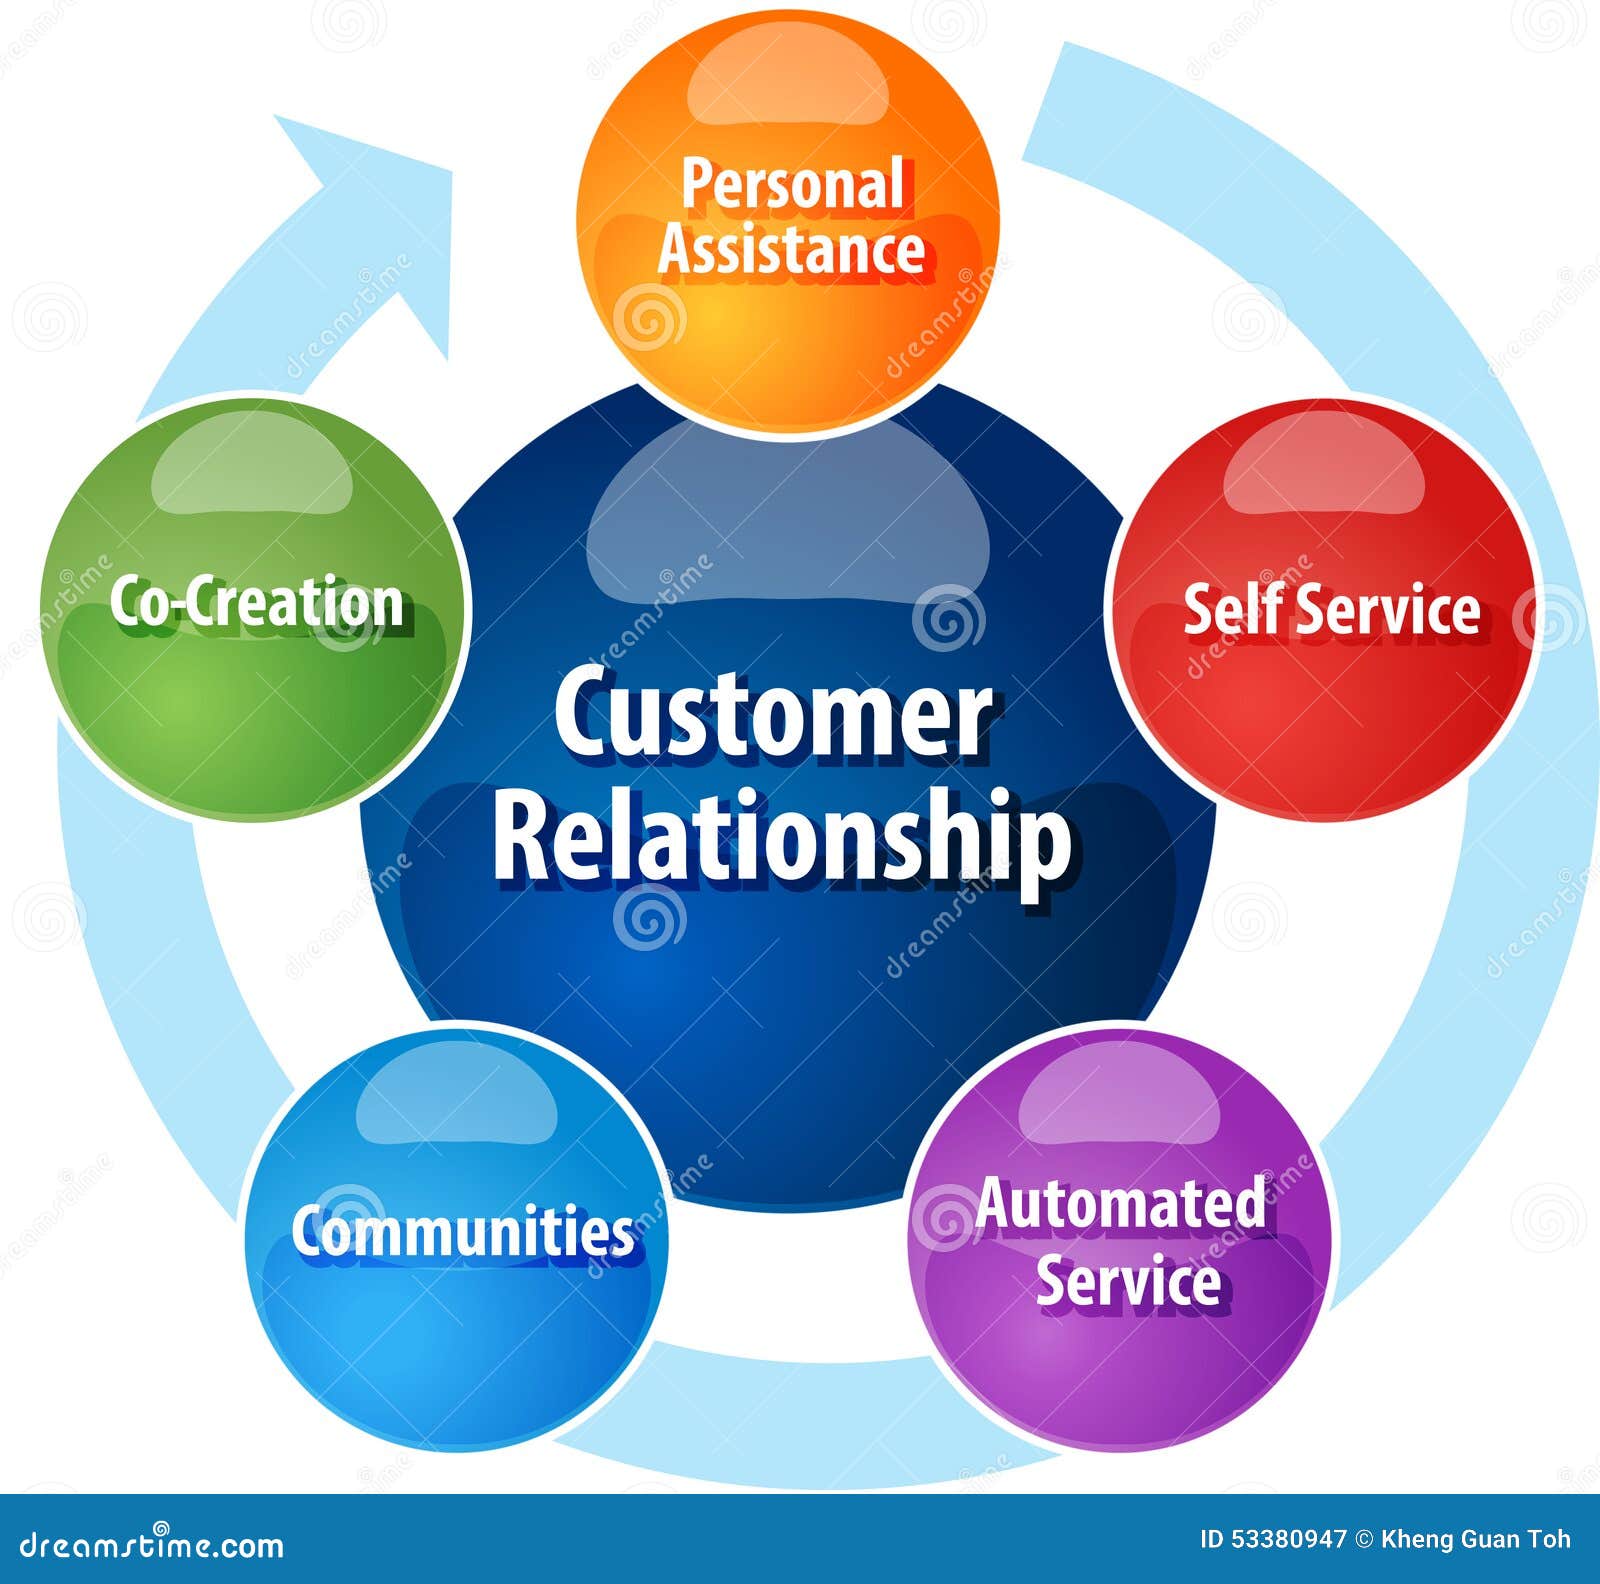 electronic customer relationship management ppt